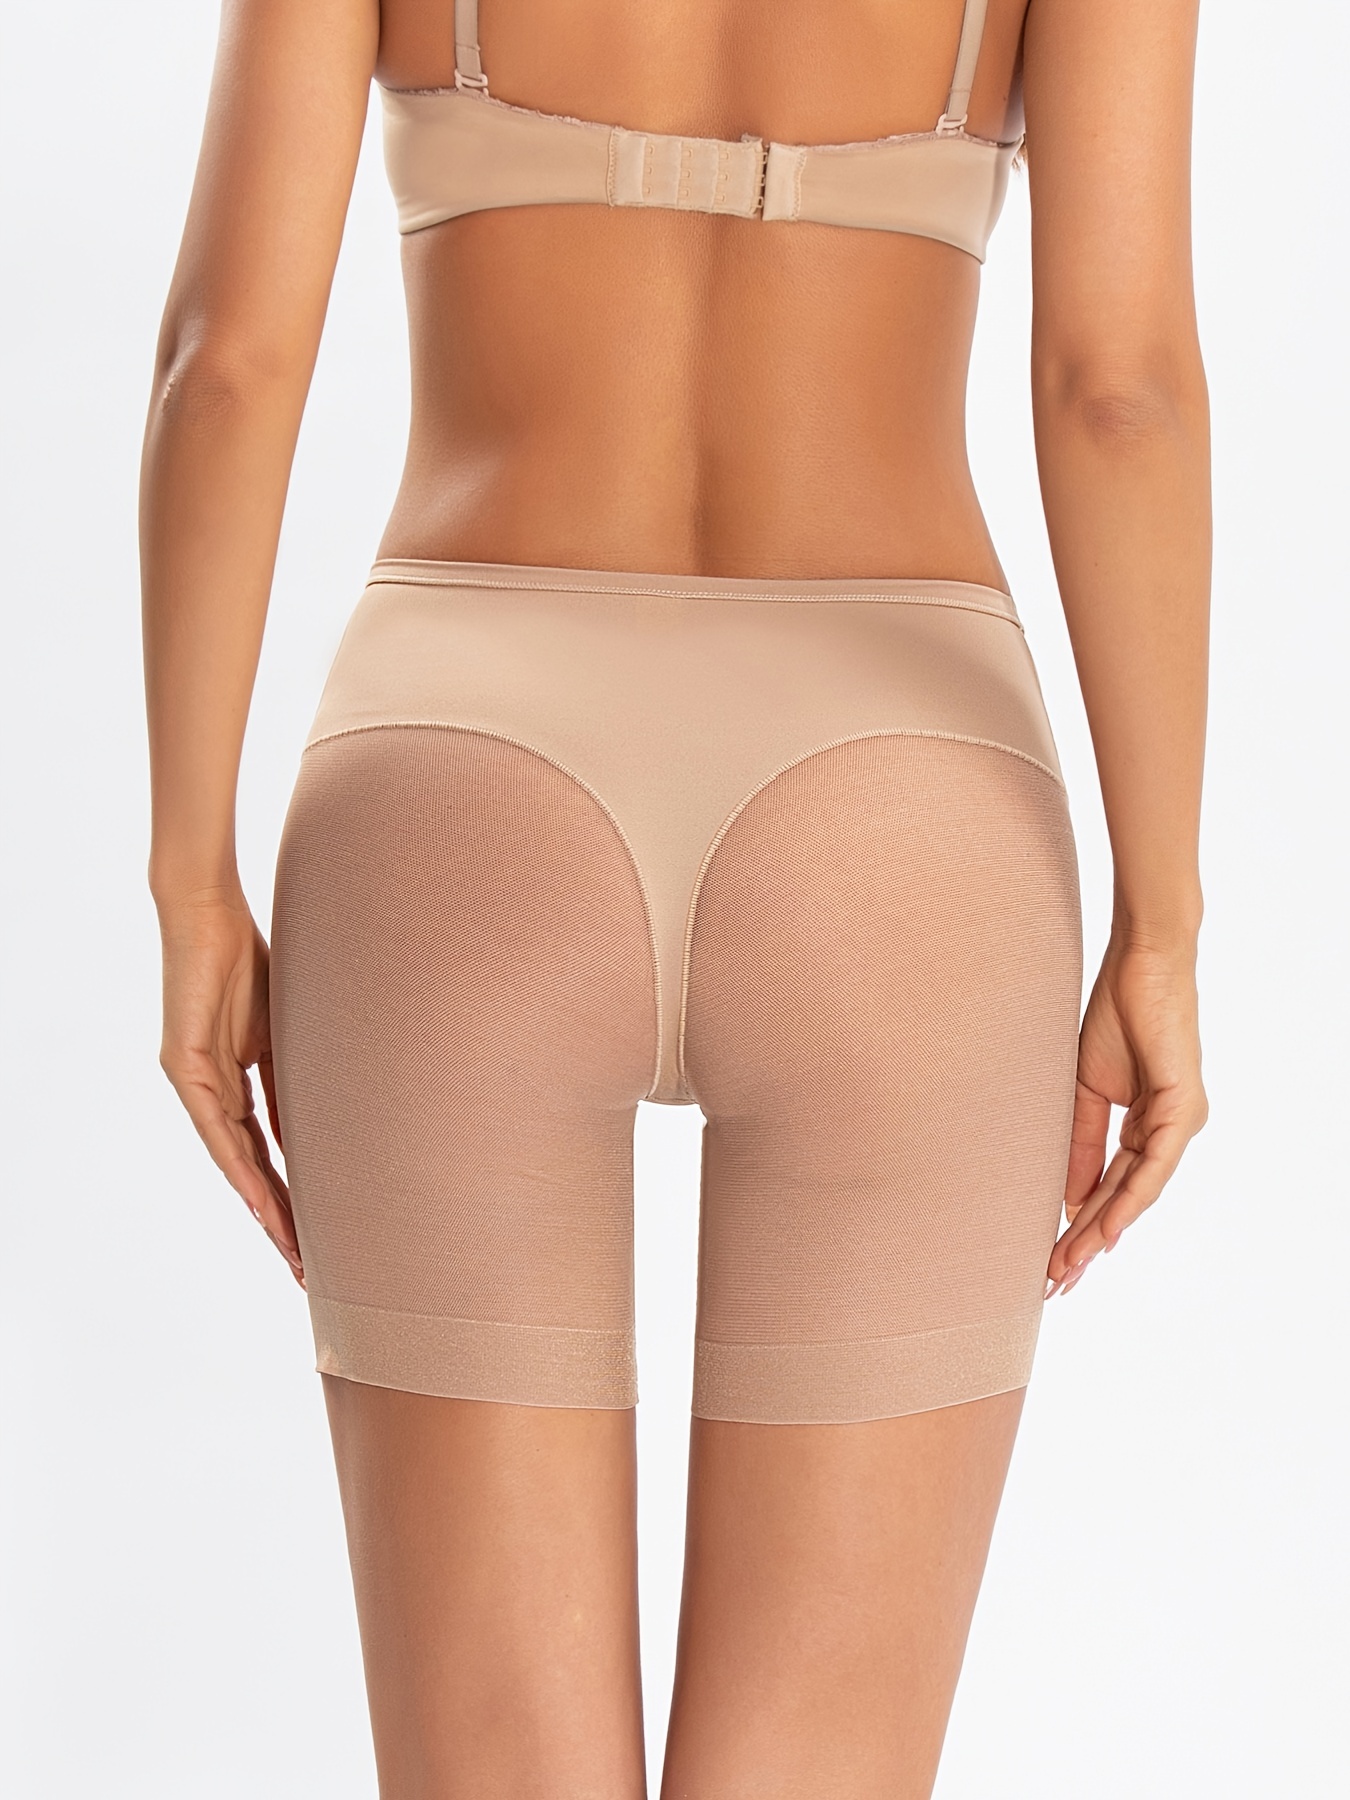 Beige Polyamide Lace Shorts Safety Pants Underwear Anti-chafing